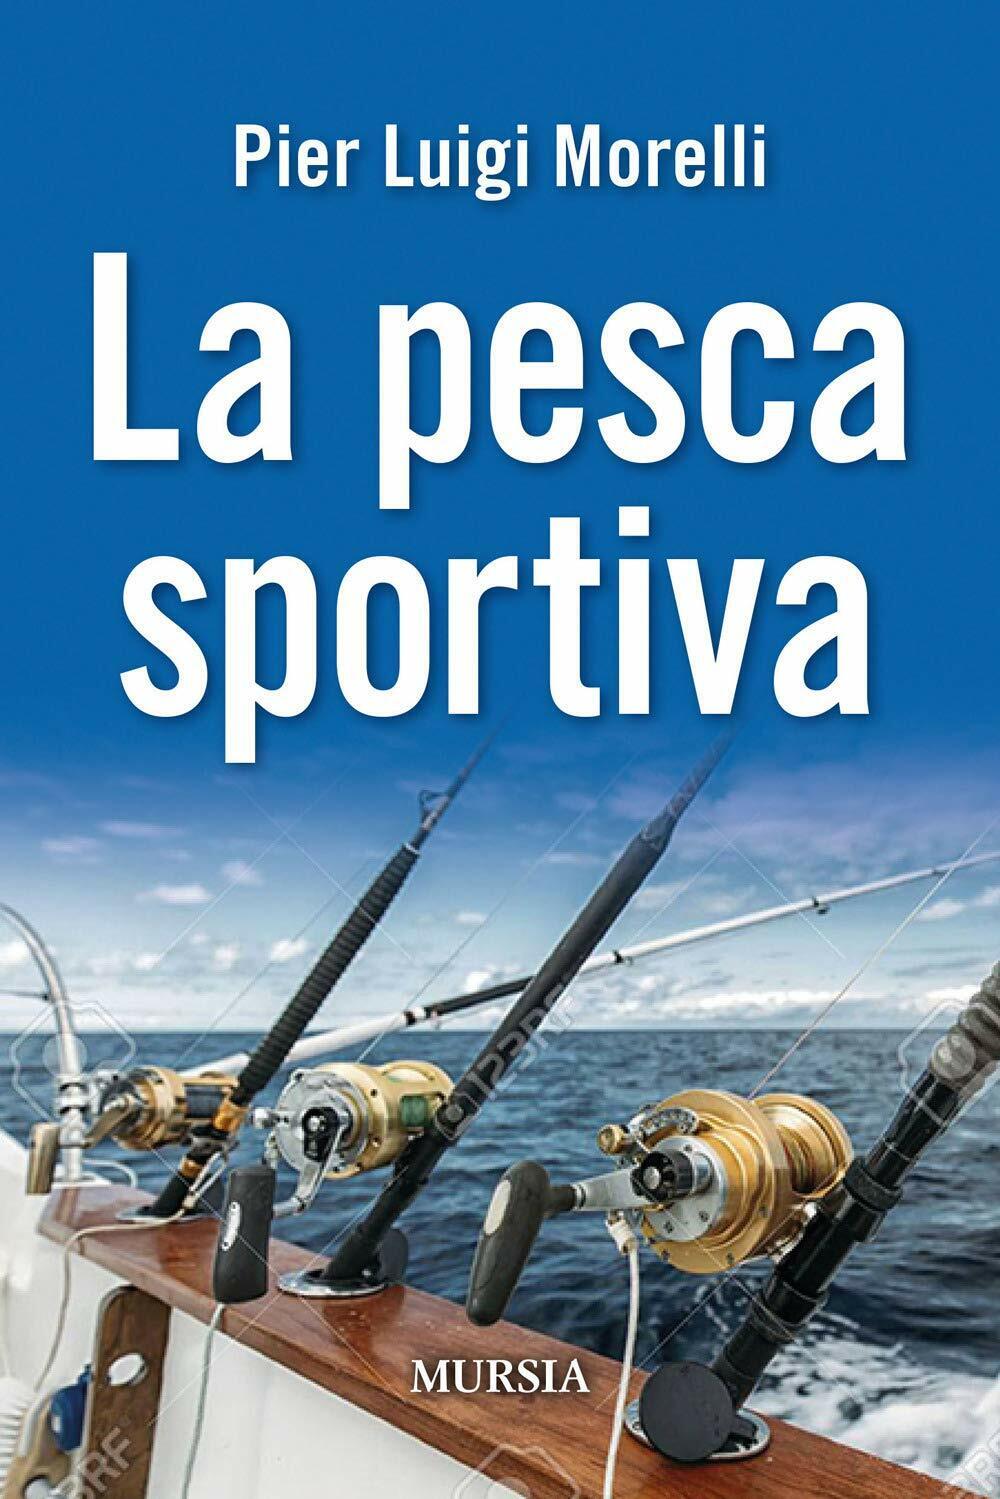 La pesca sportiva - Pier Luigi Morelli - Ugo Mursia Editore, 2020 libro usato